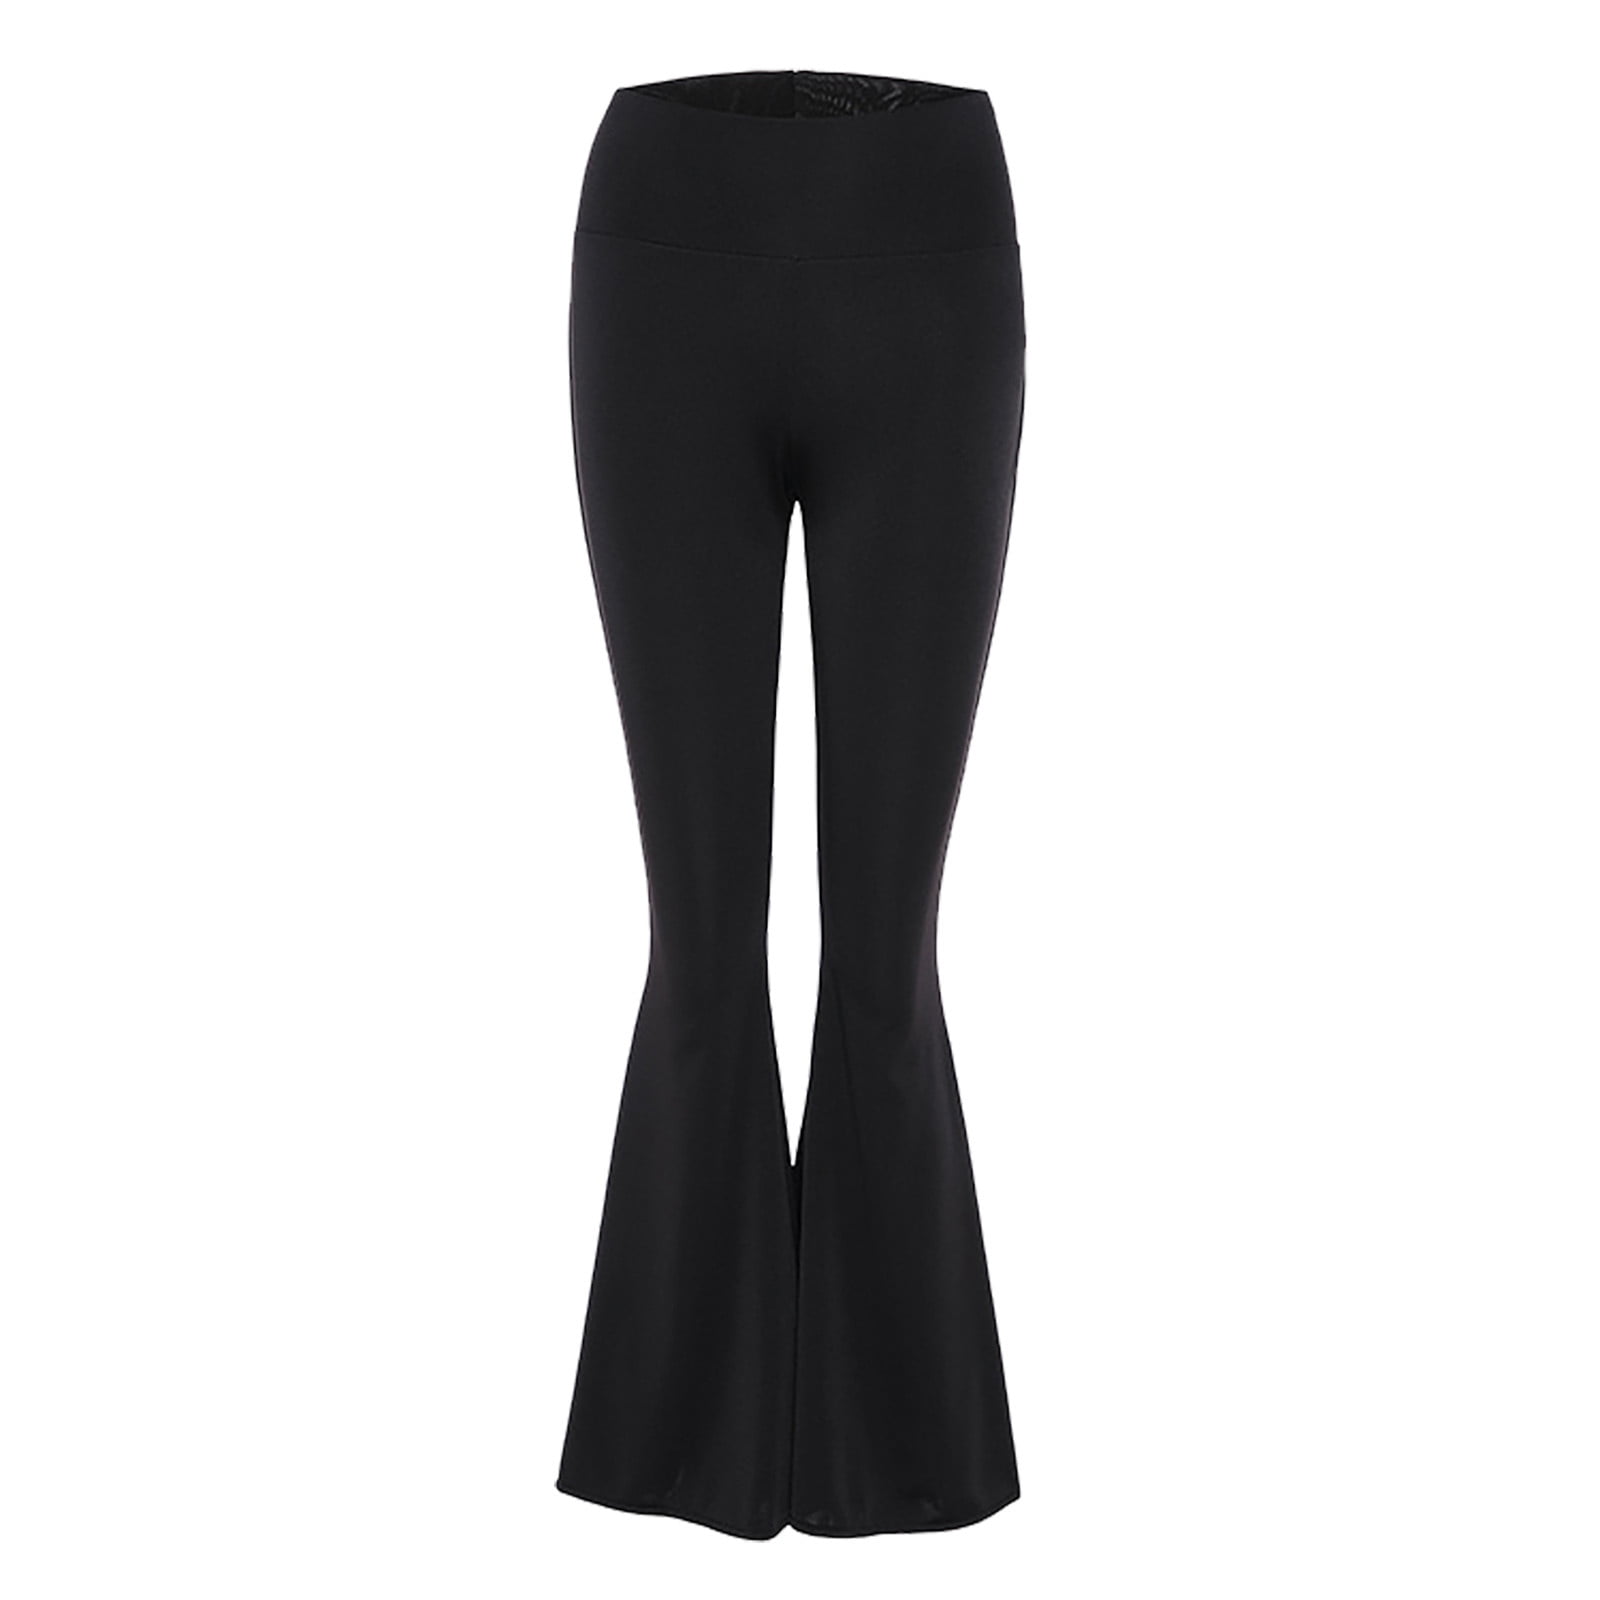 Women High Waist Elastic Long Leggings Breathable Yoga Pants. Product Code  : LL ( Long Legging )Pus SizeXL,2XL - Stella's Fashion